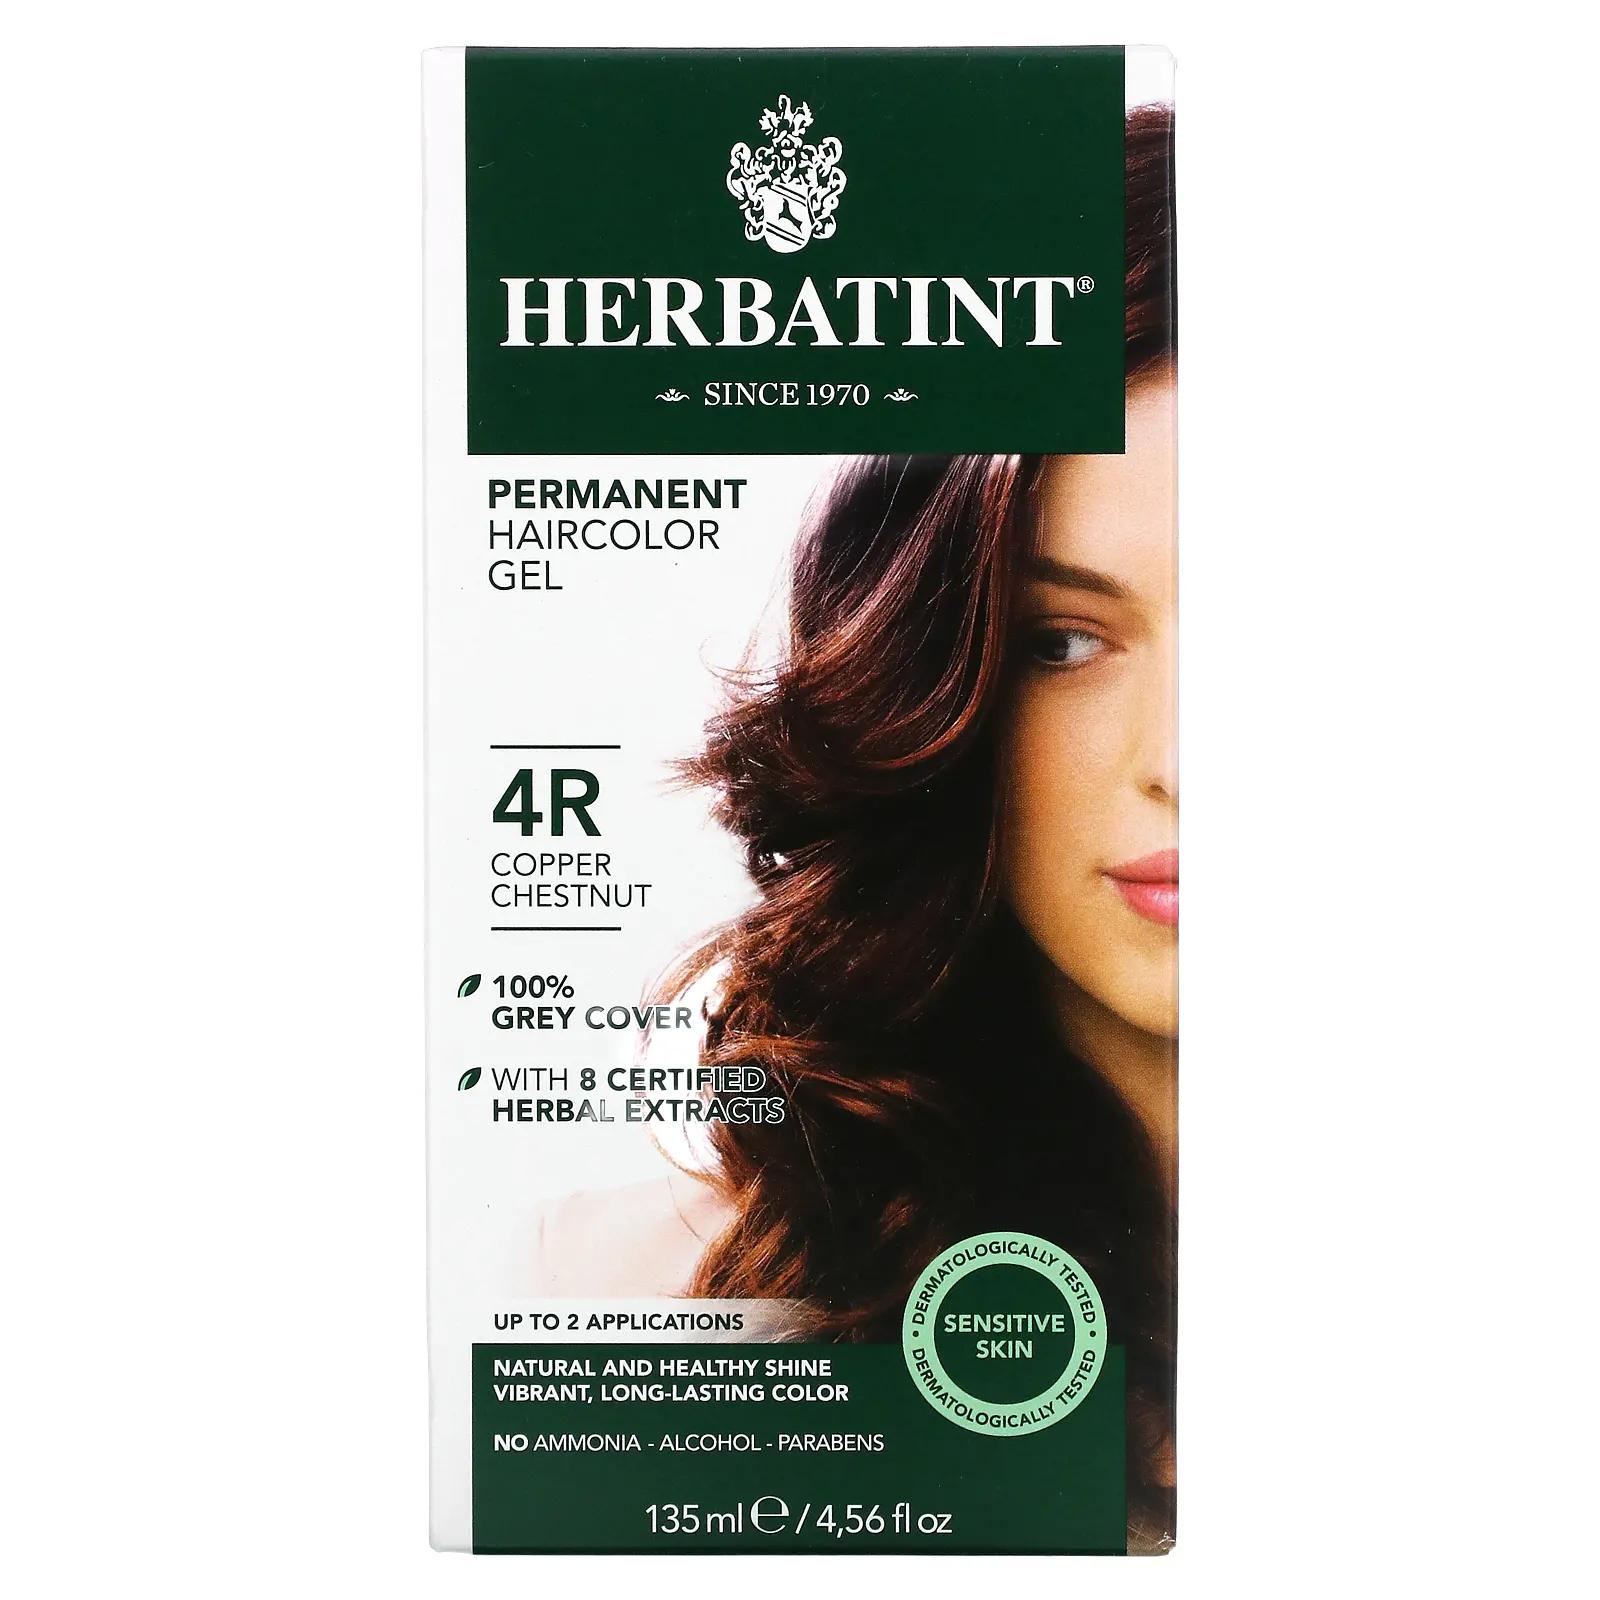 Herbatint Перманентная краска-гель для волос 4R медный каштан 4,56 жидкой унции (135 мл) перманентная гель краска для волос herbatint 5m светлый махагони каштан 135 мл